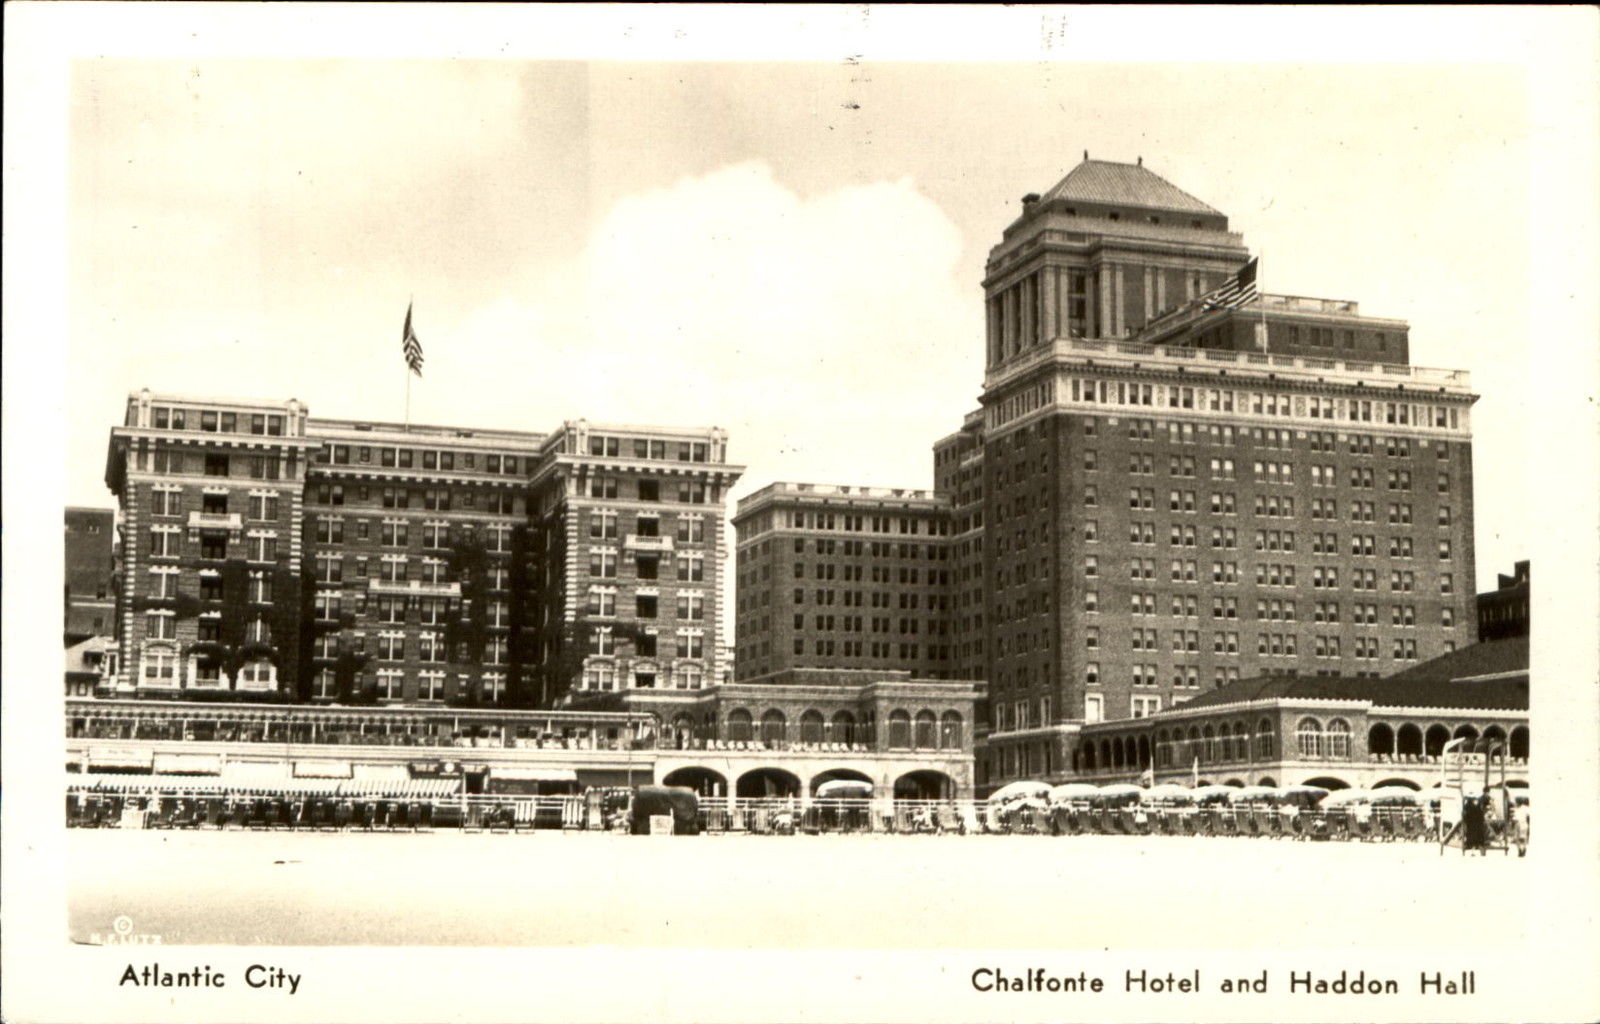 Atlantic City - Chalfonte and Haddon Hall Hotels - 1844